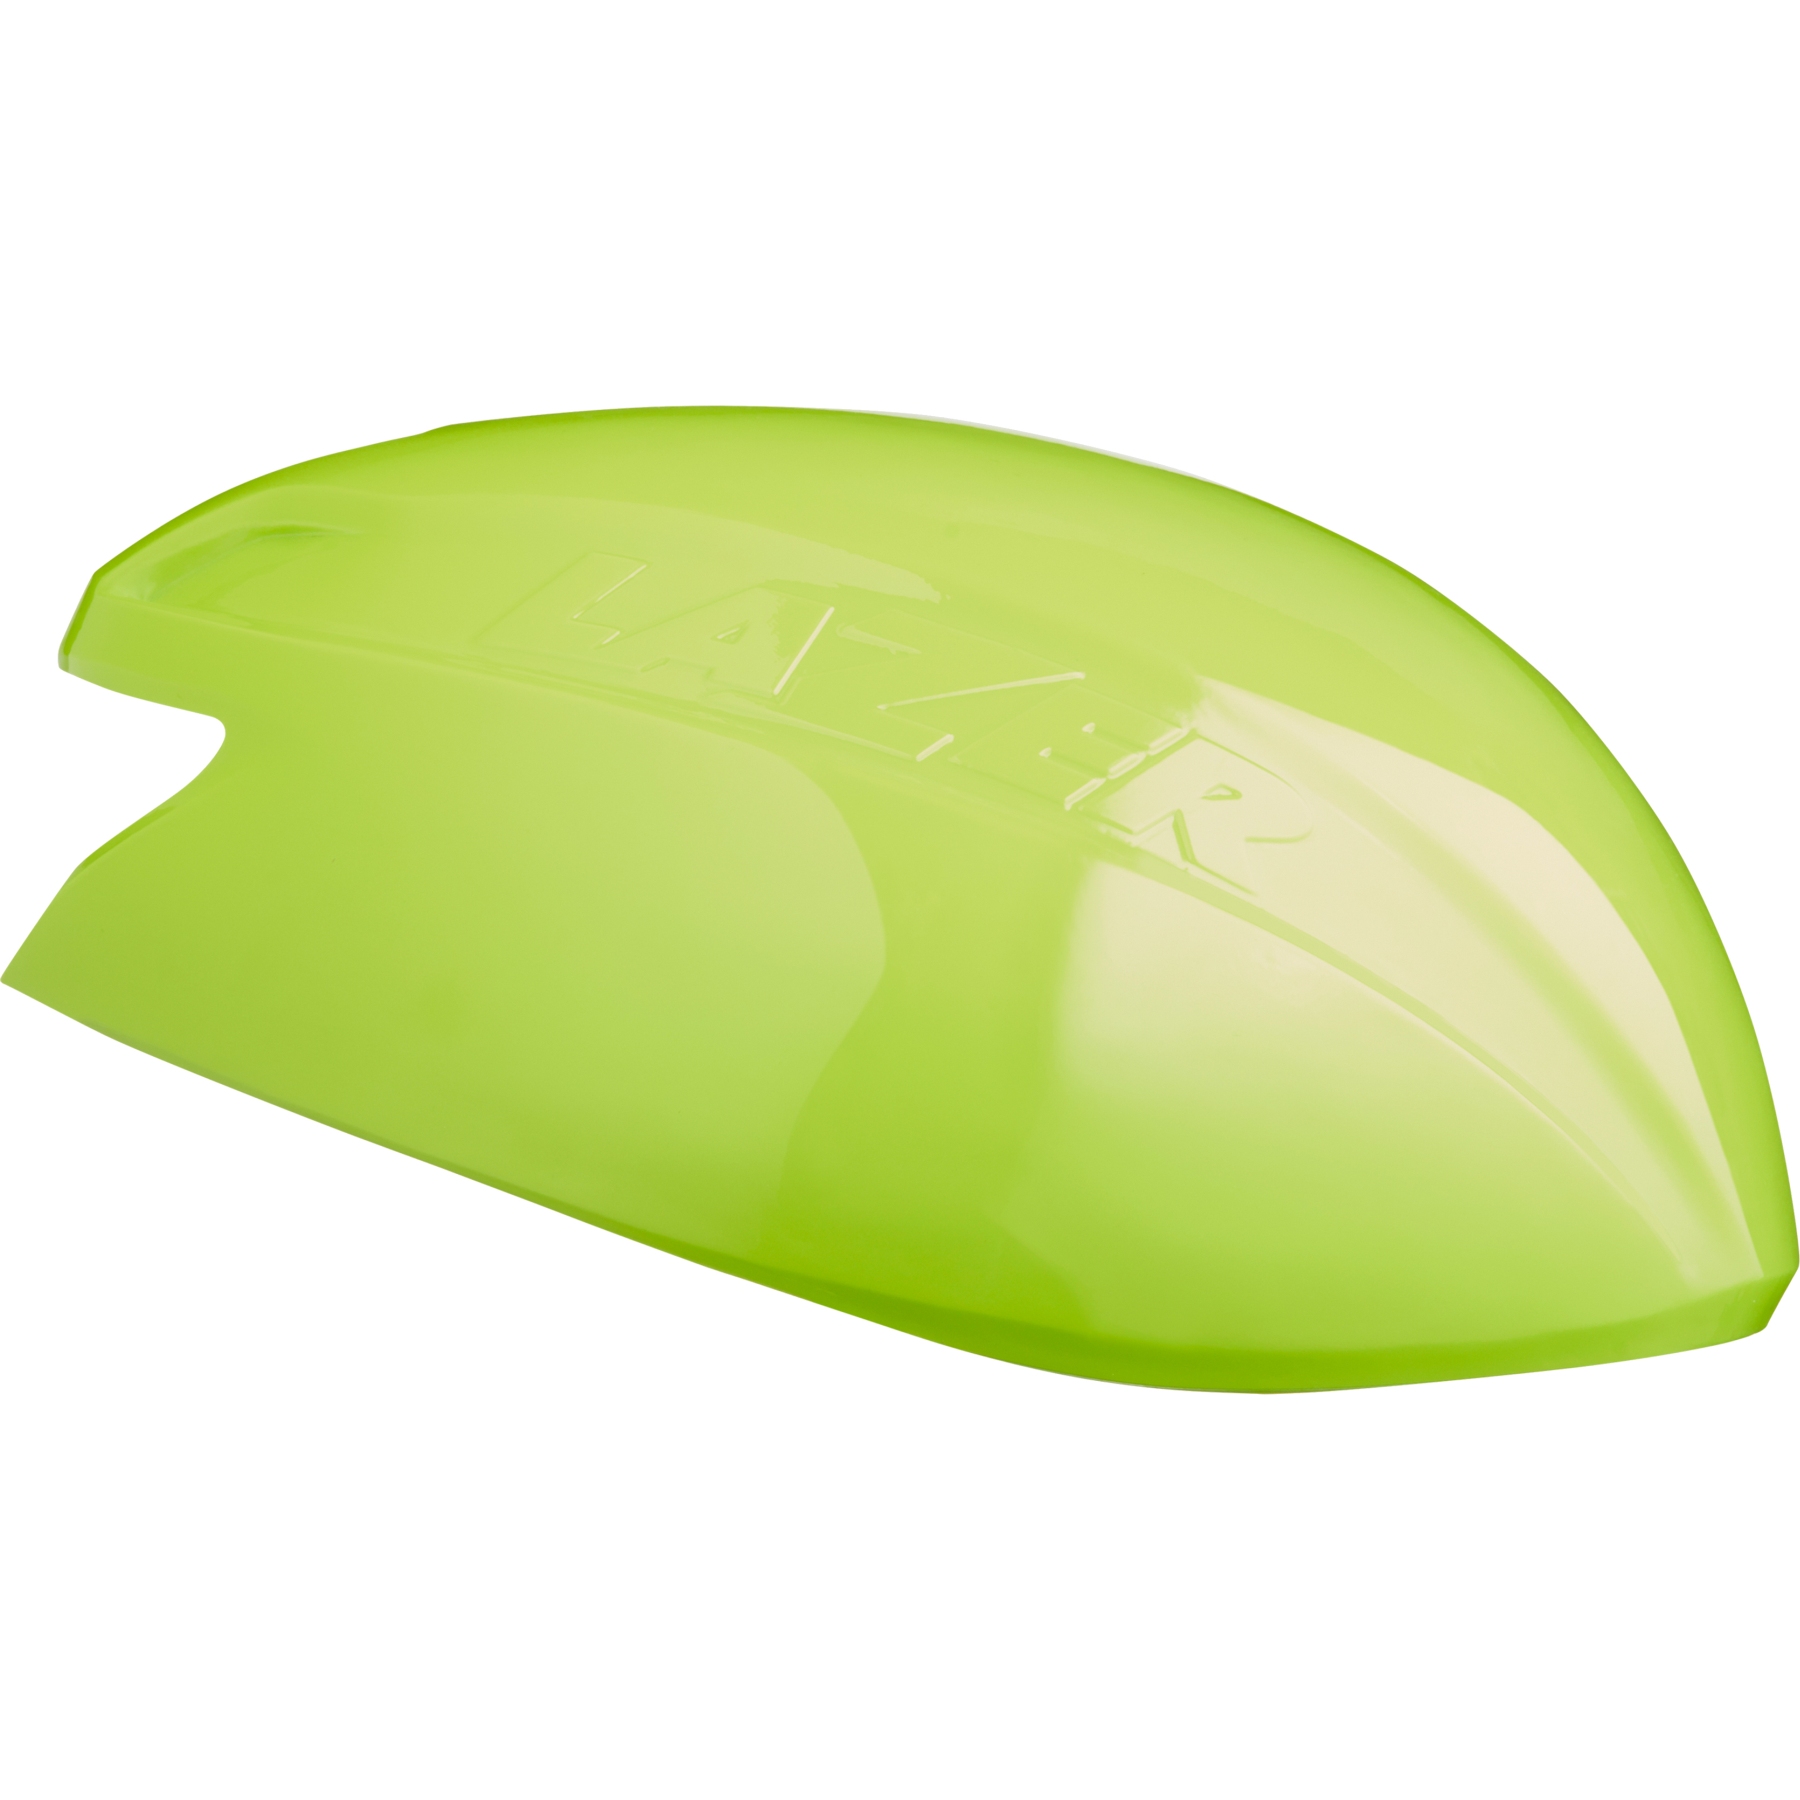 Picture of Lazer Aeroshell Helmet Cover for Sphere - flash yellow